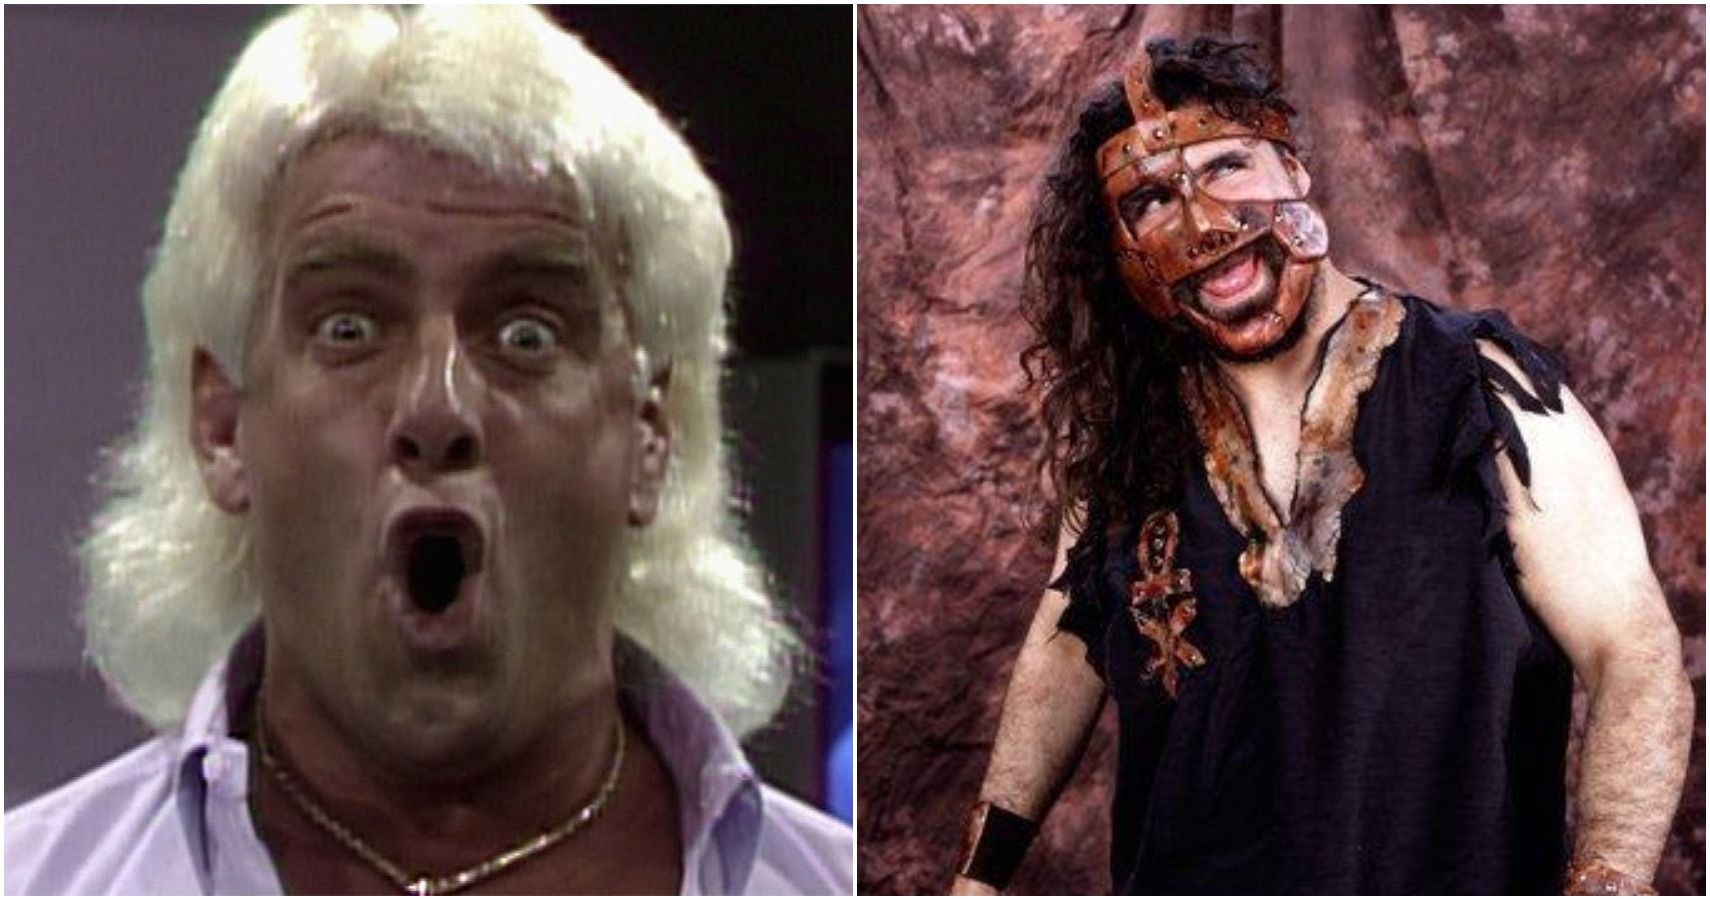 Split Screen Image Of NWA Ric Flair In A Segment & WWE Mankind Posing For Photo